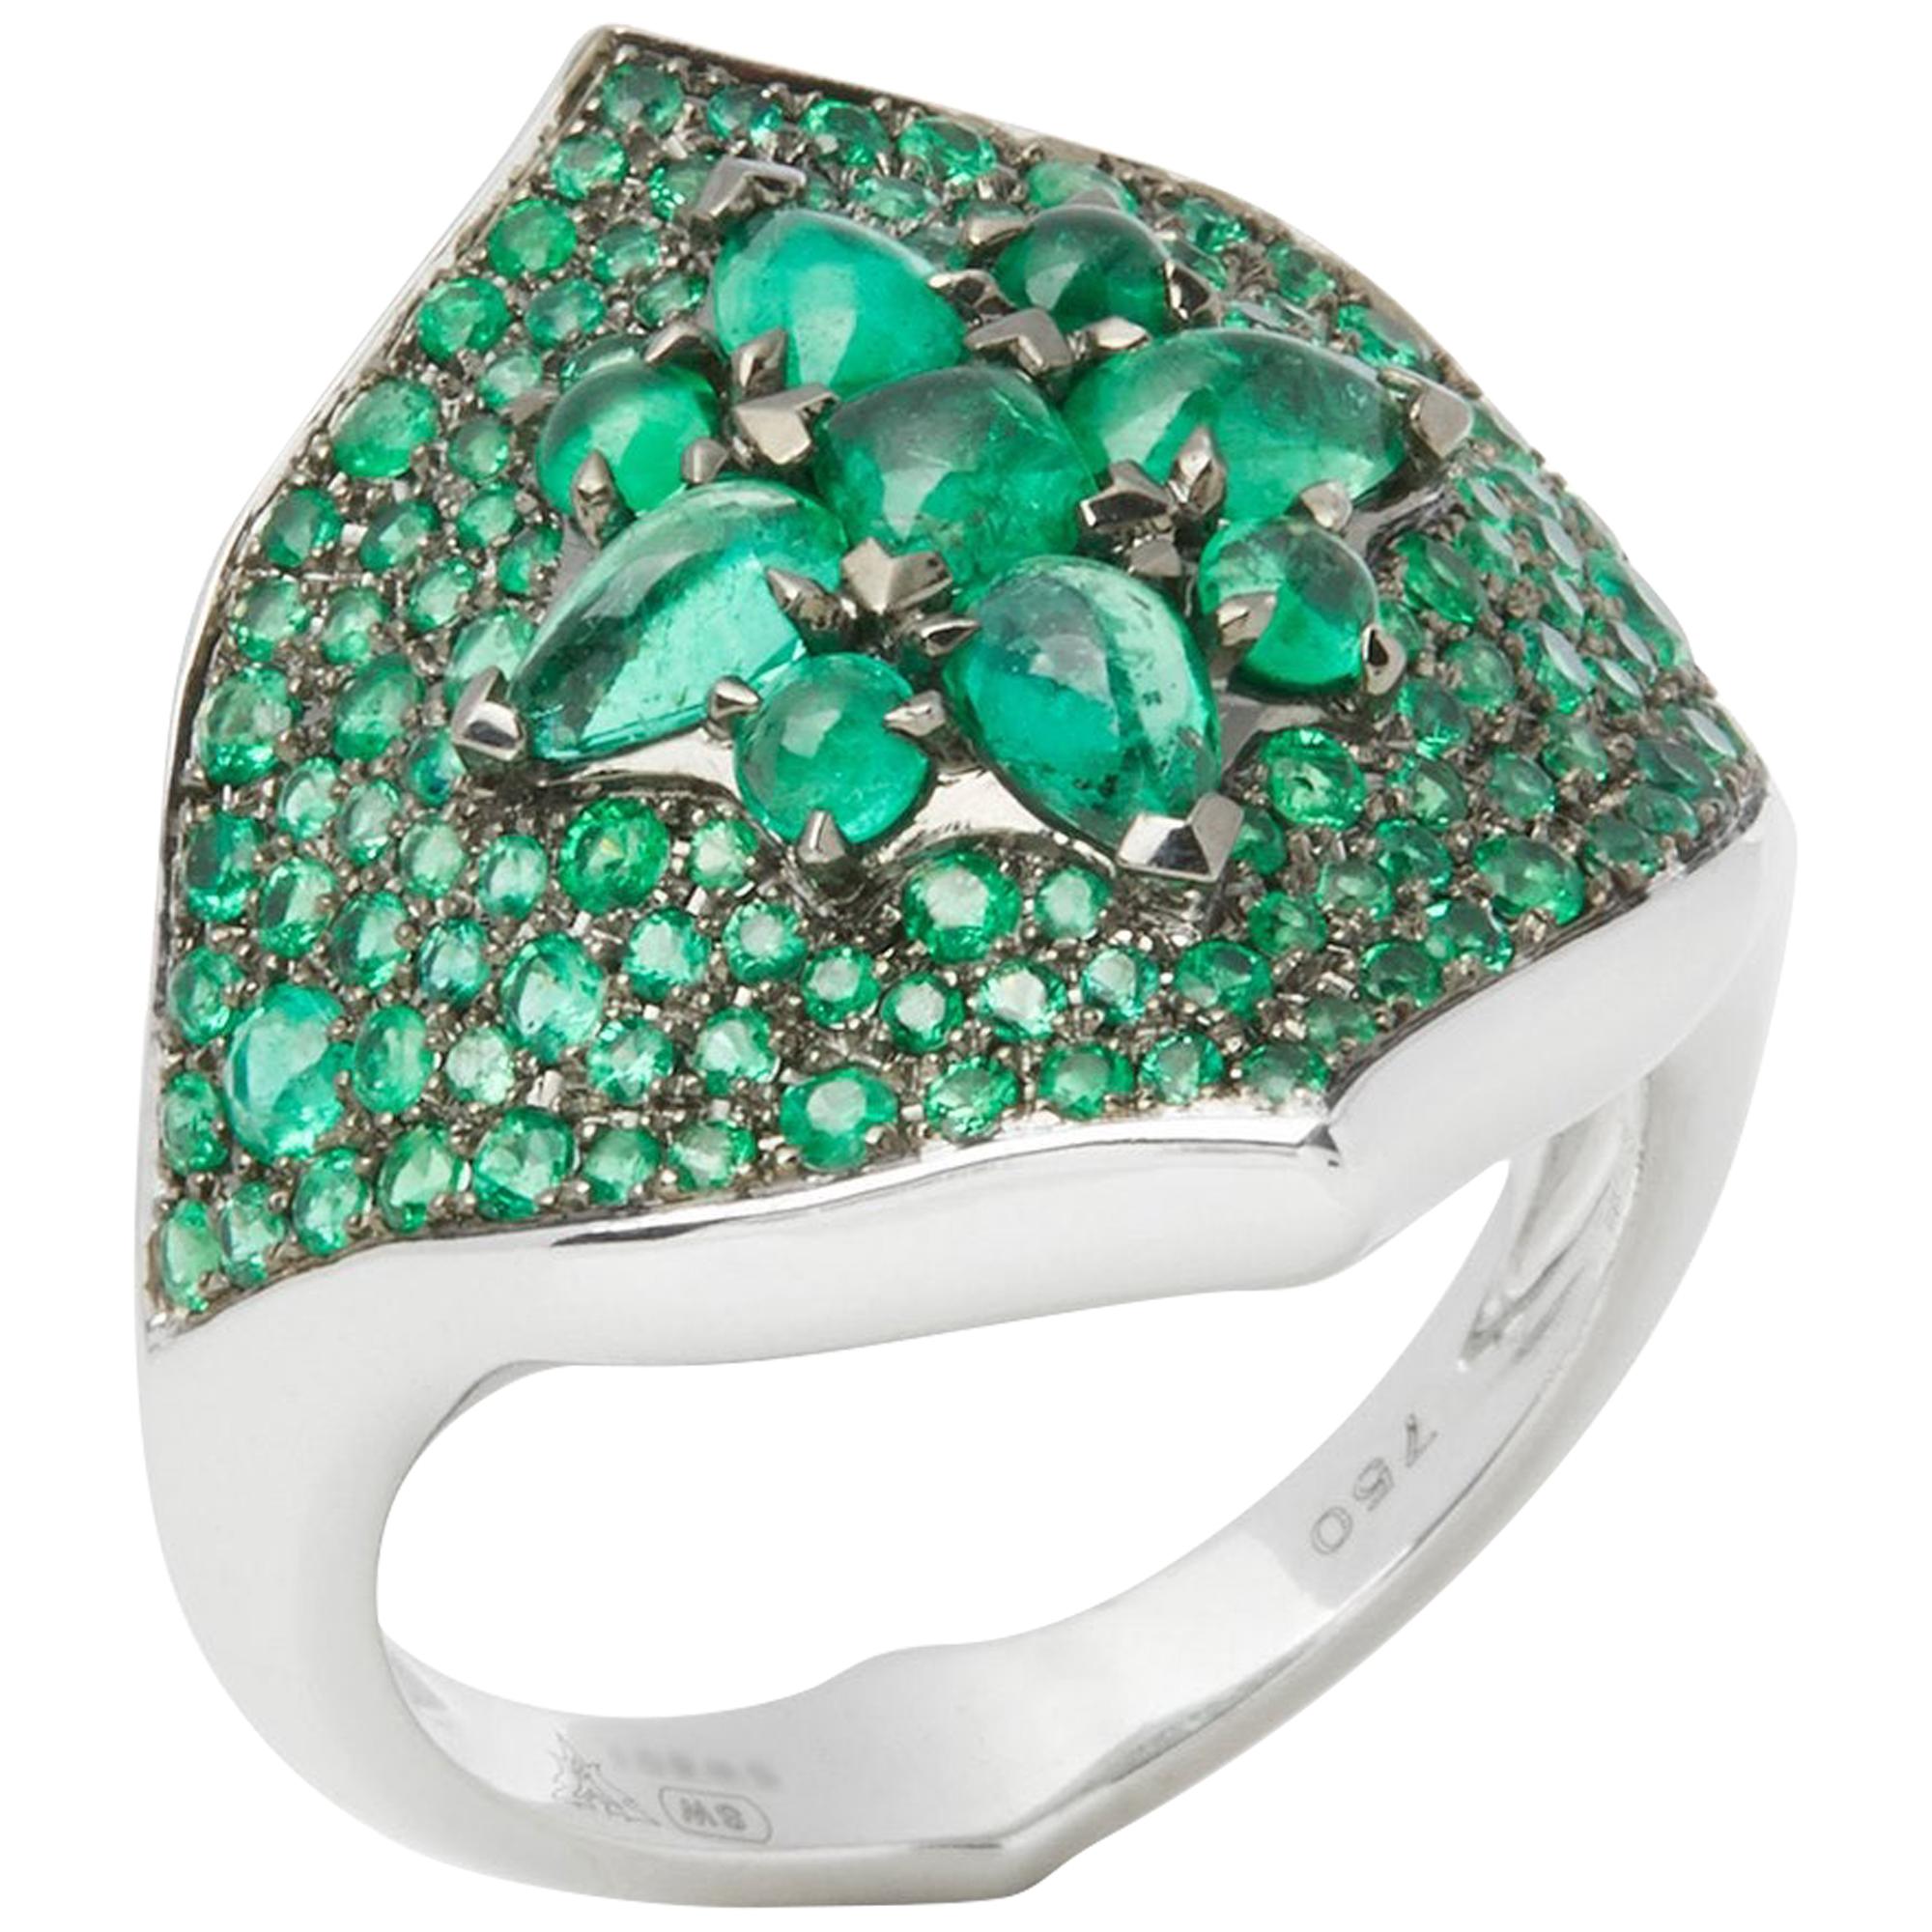 Stephen Webster Belle Époque 18 Carat White Gold Emerald Ring